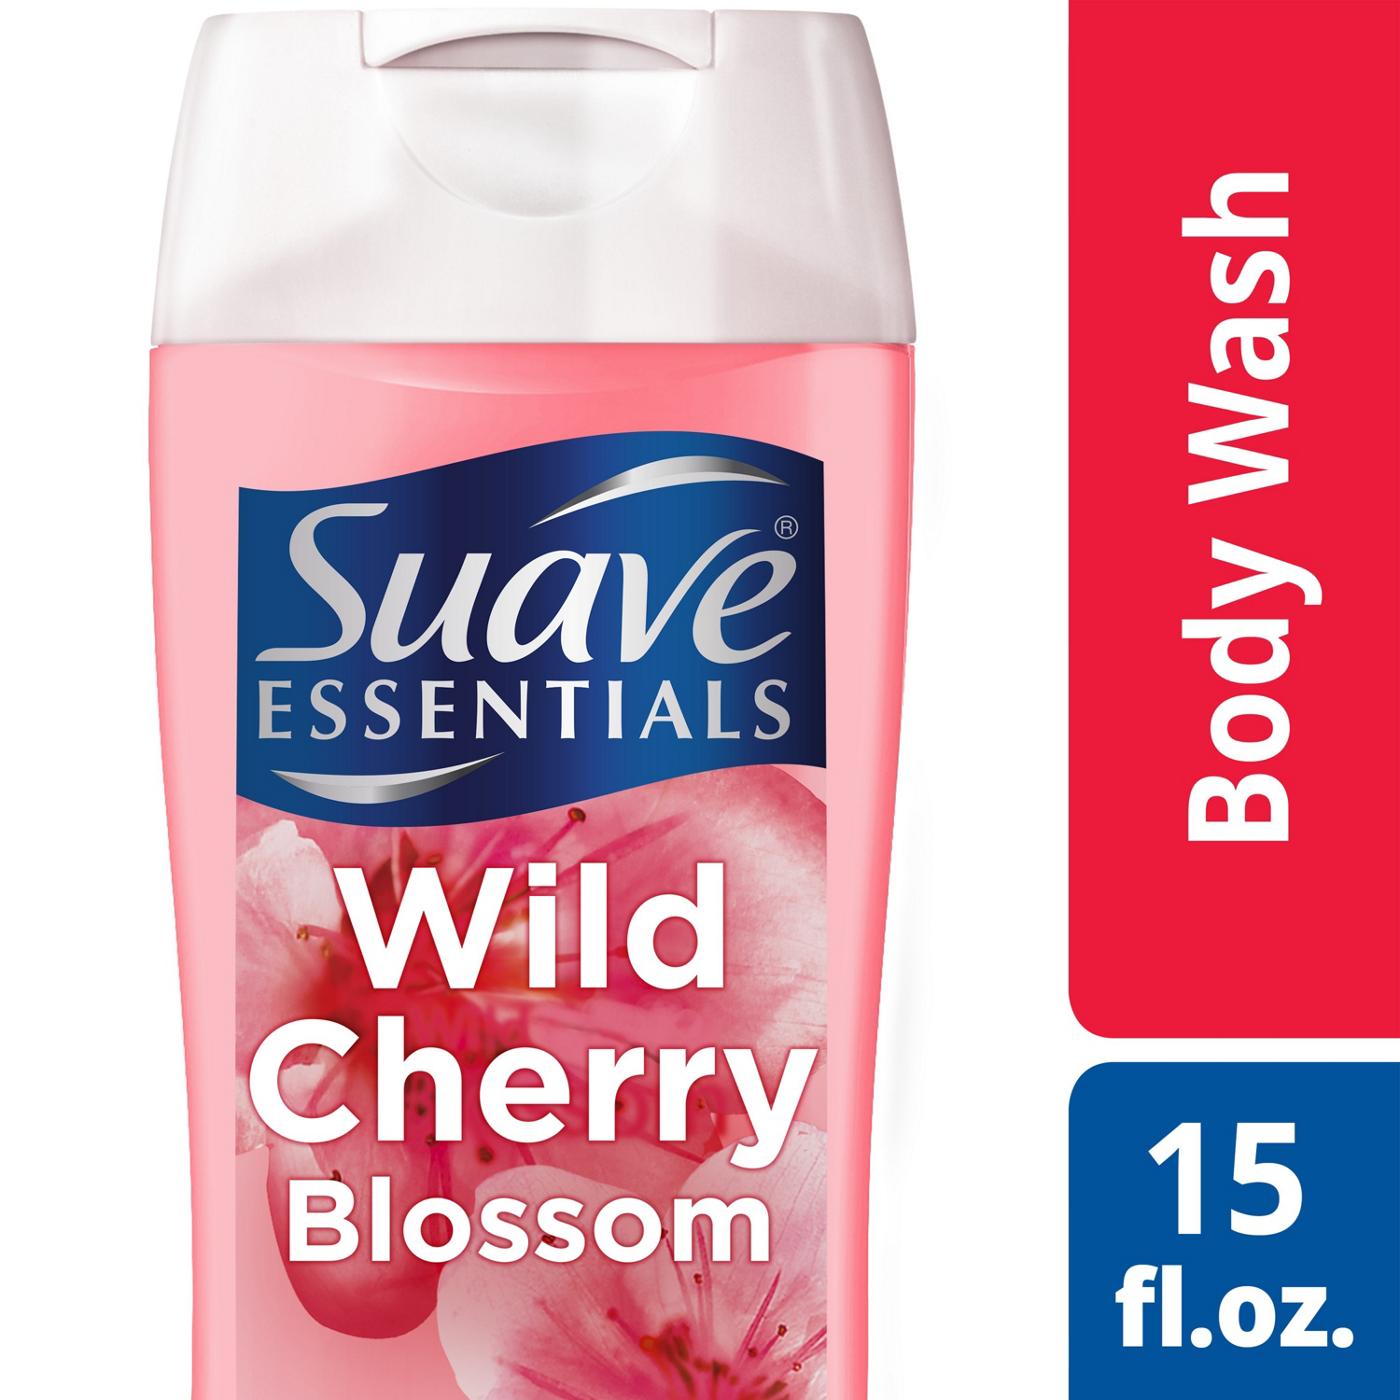 Suave Essentials Body Wash Wild Cherry Blossom; image 3 of 4